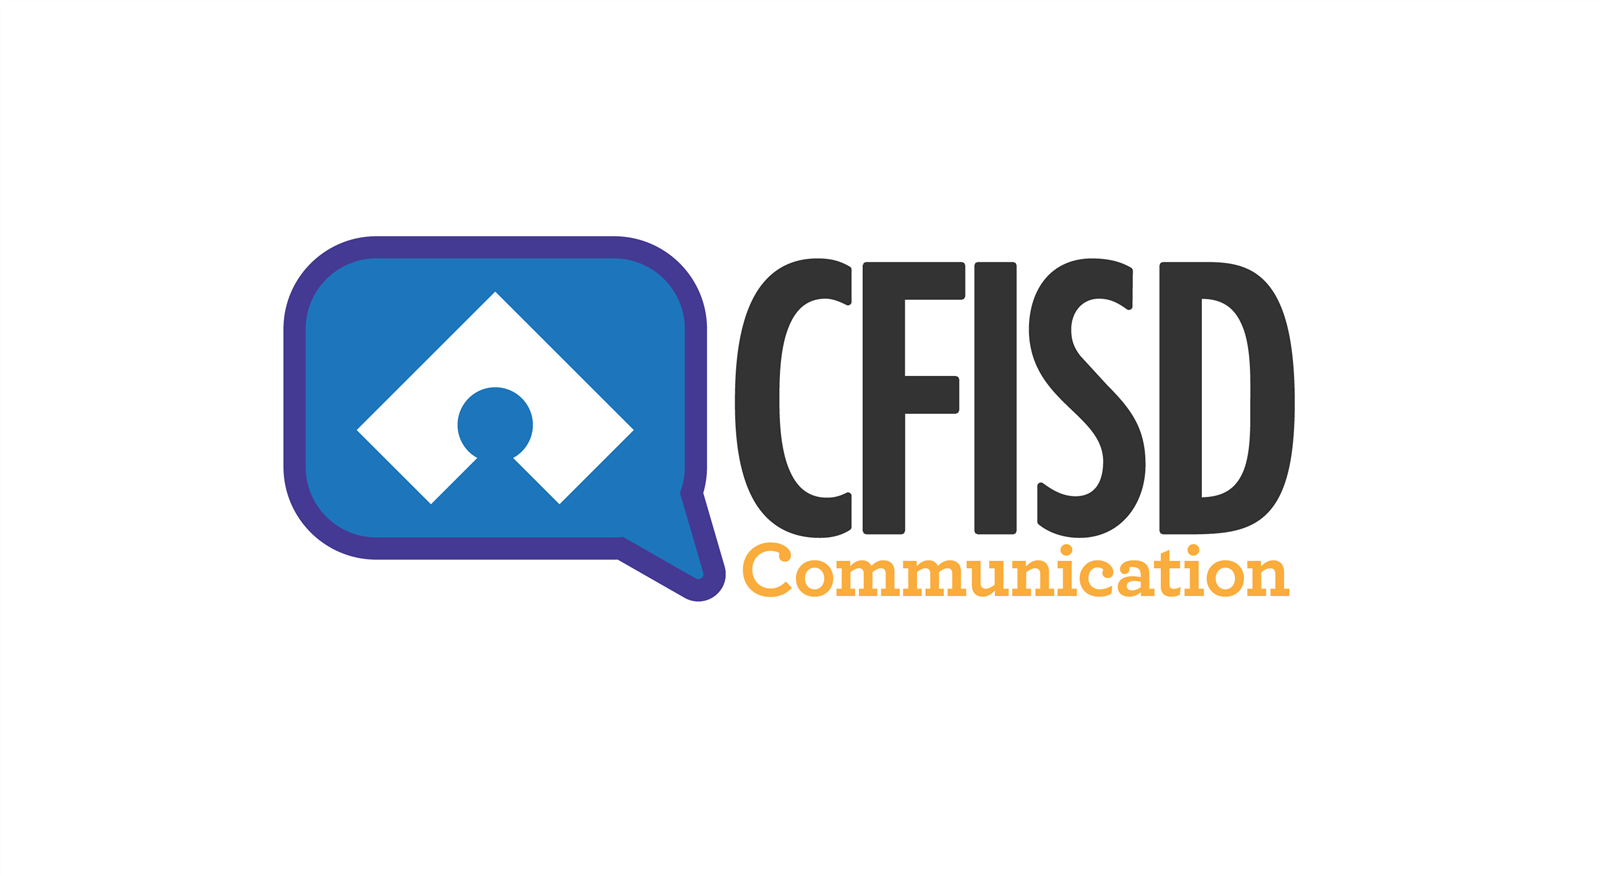 CFISD Communication logo